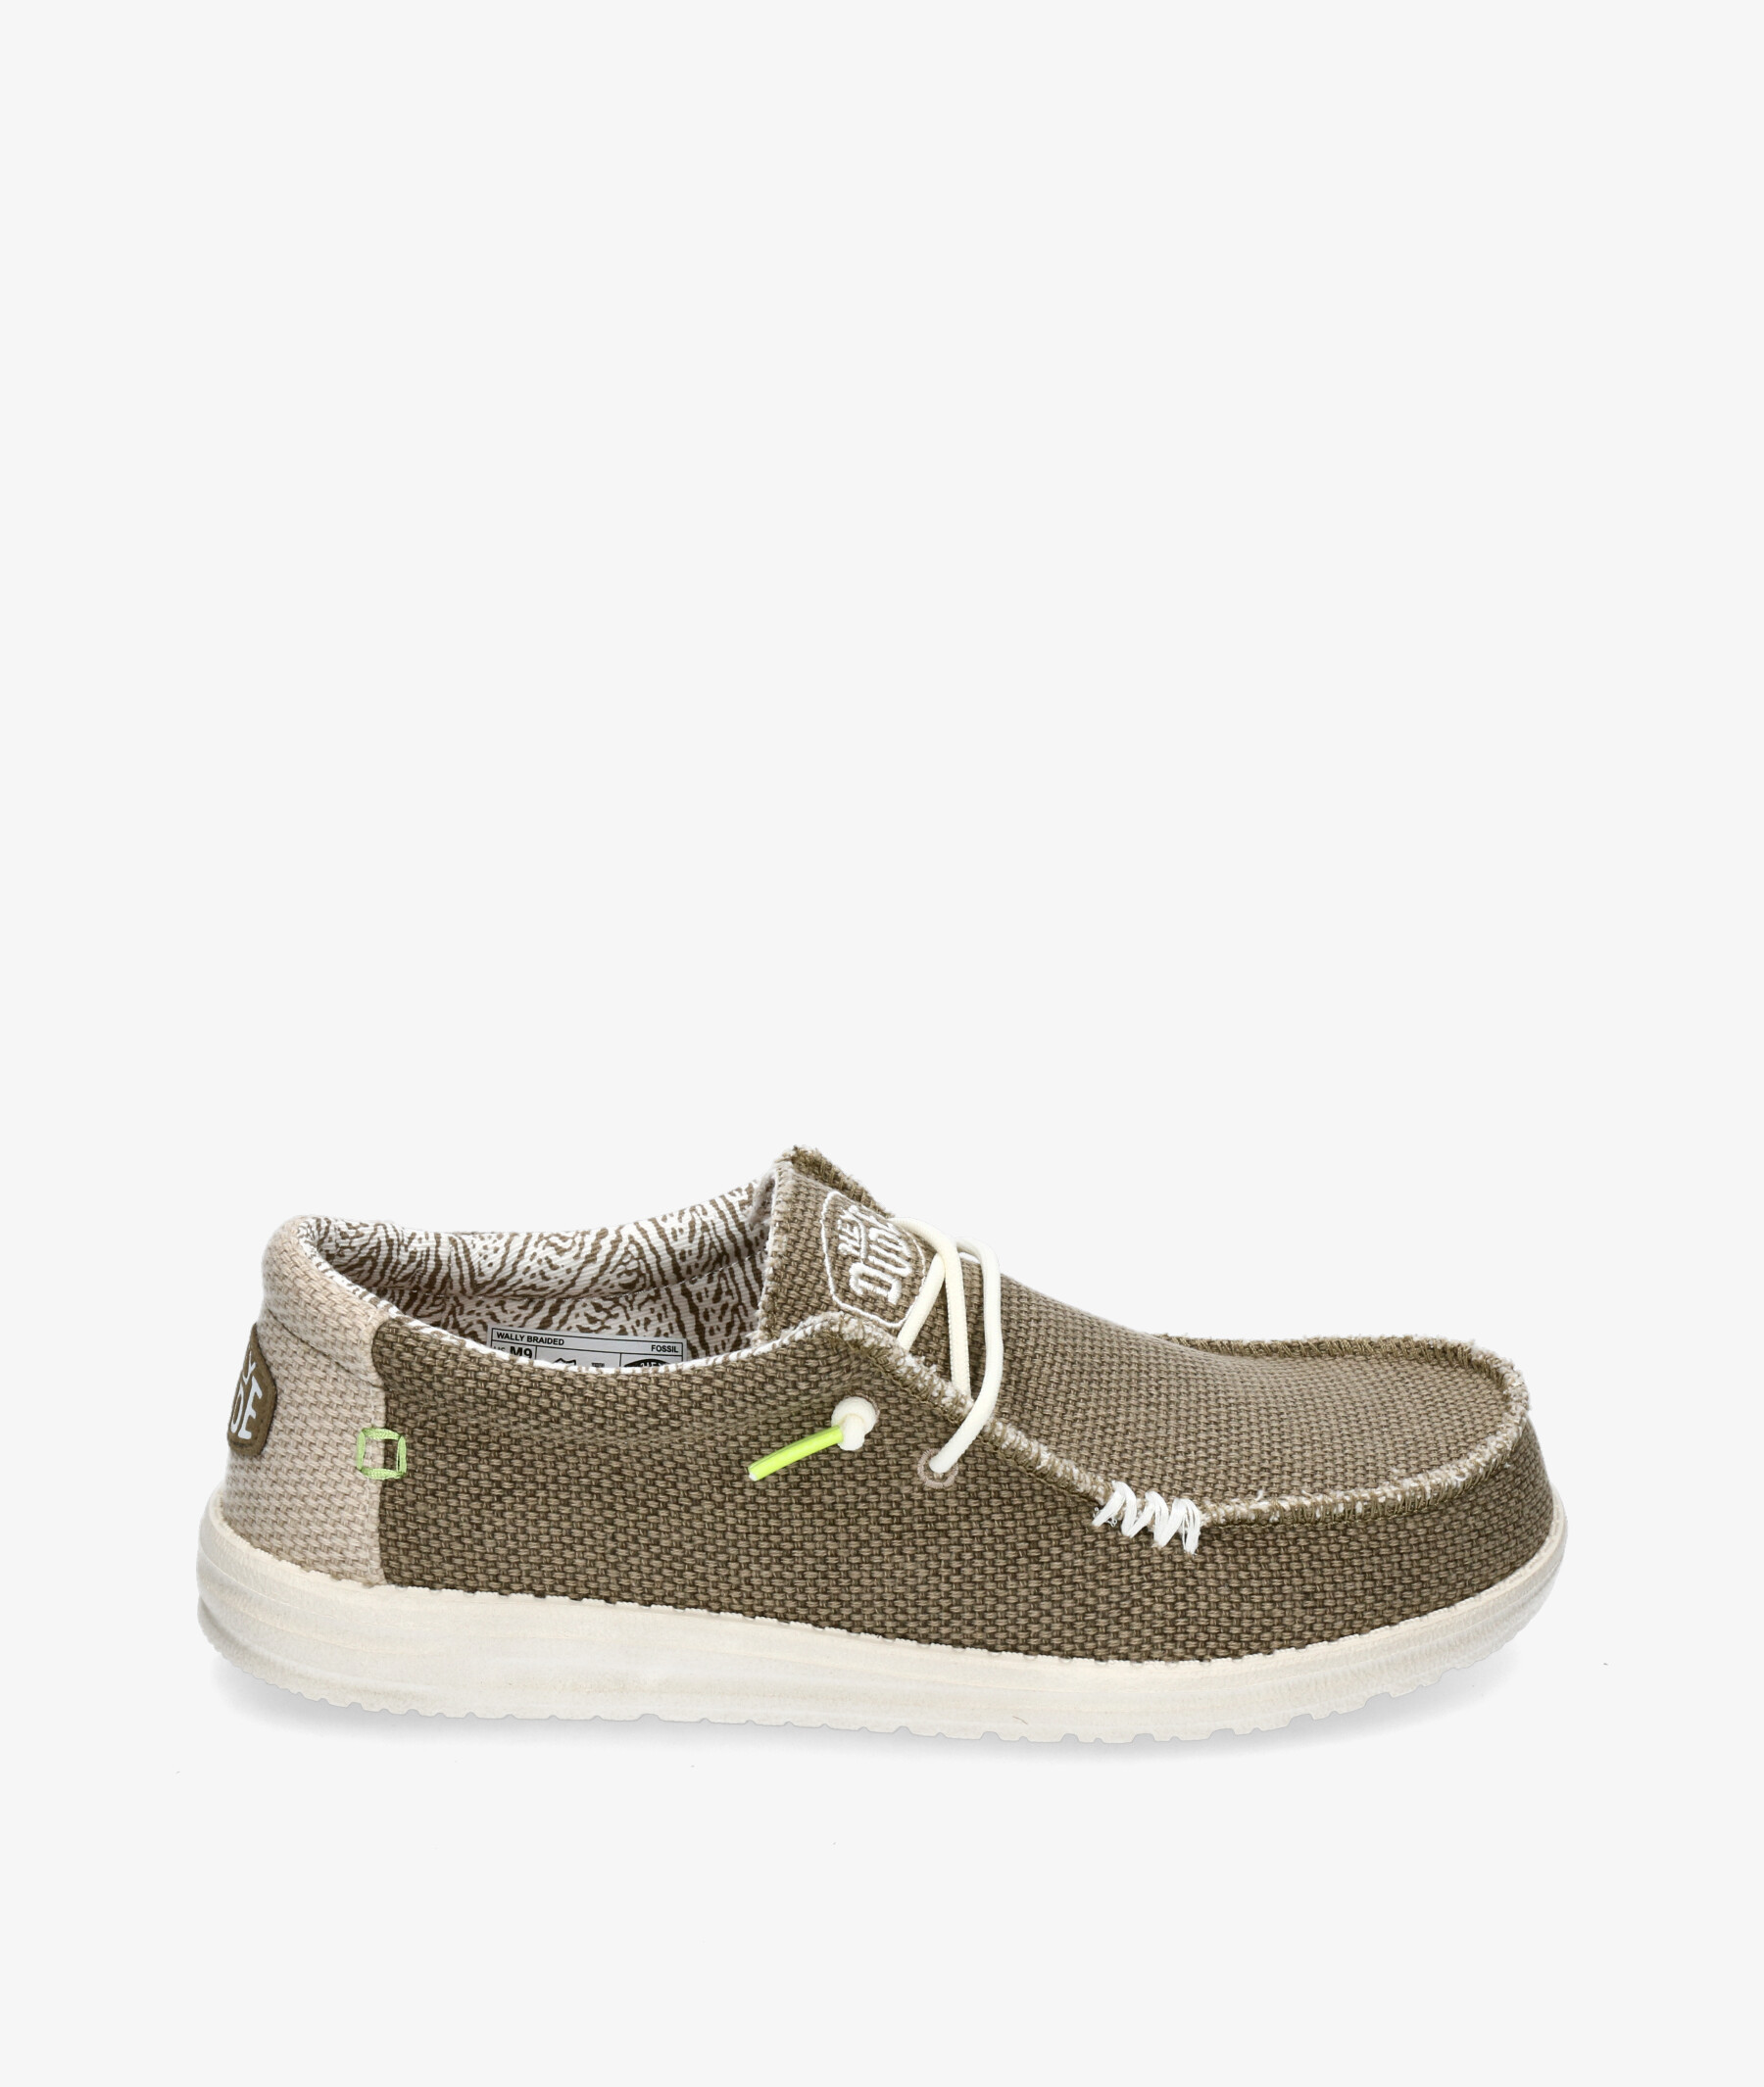 Walk & Fly comfort sandals - 7325-16170 | pabloochoa.shoes